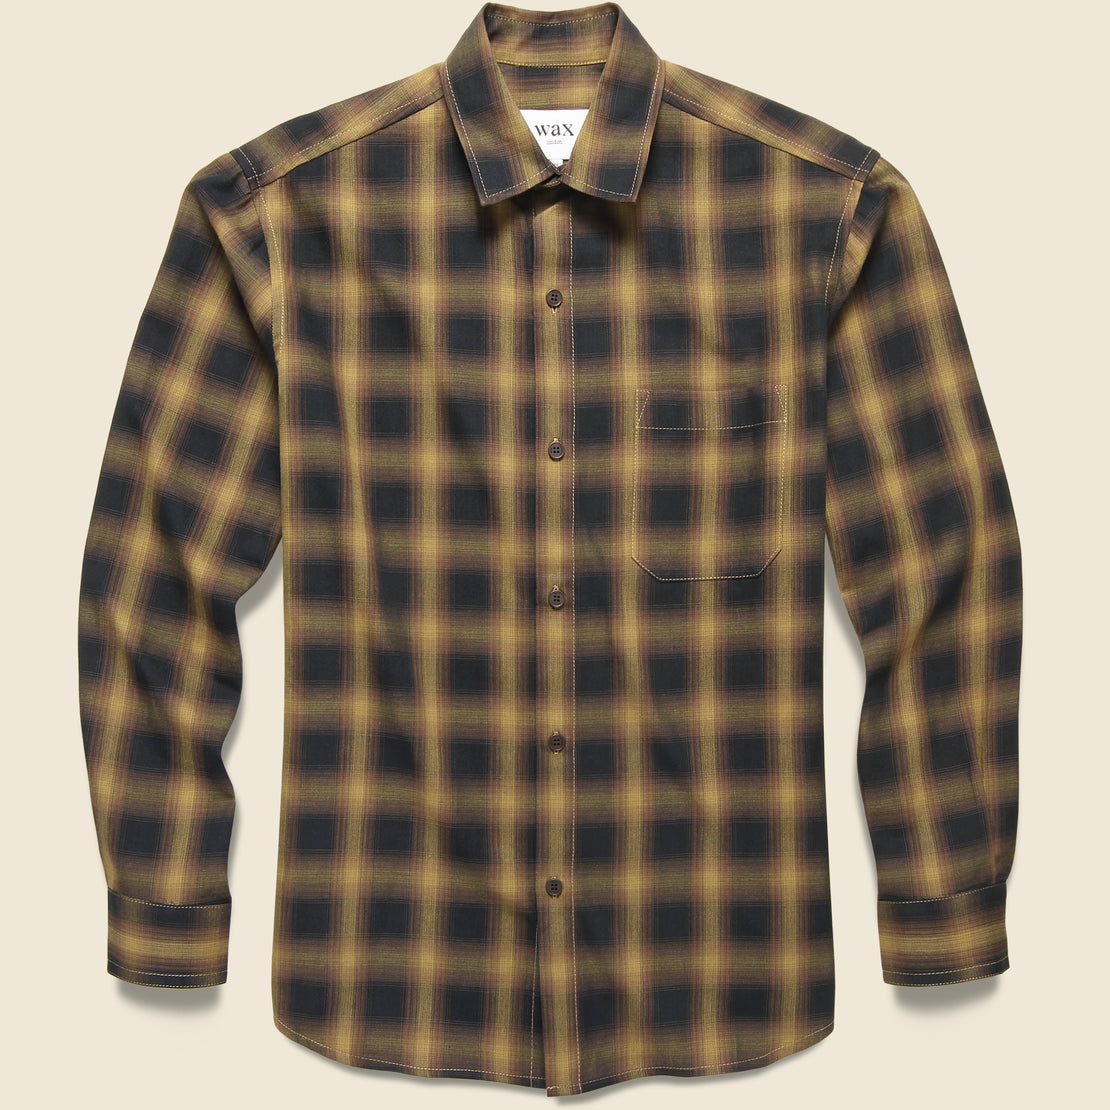 Wax London OZ Shirt - Brown Berkley Check